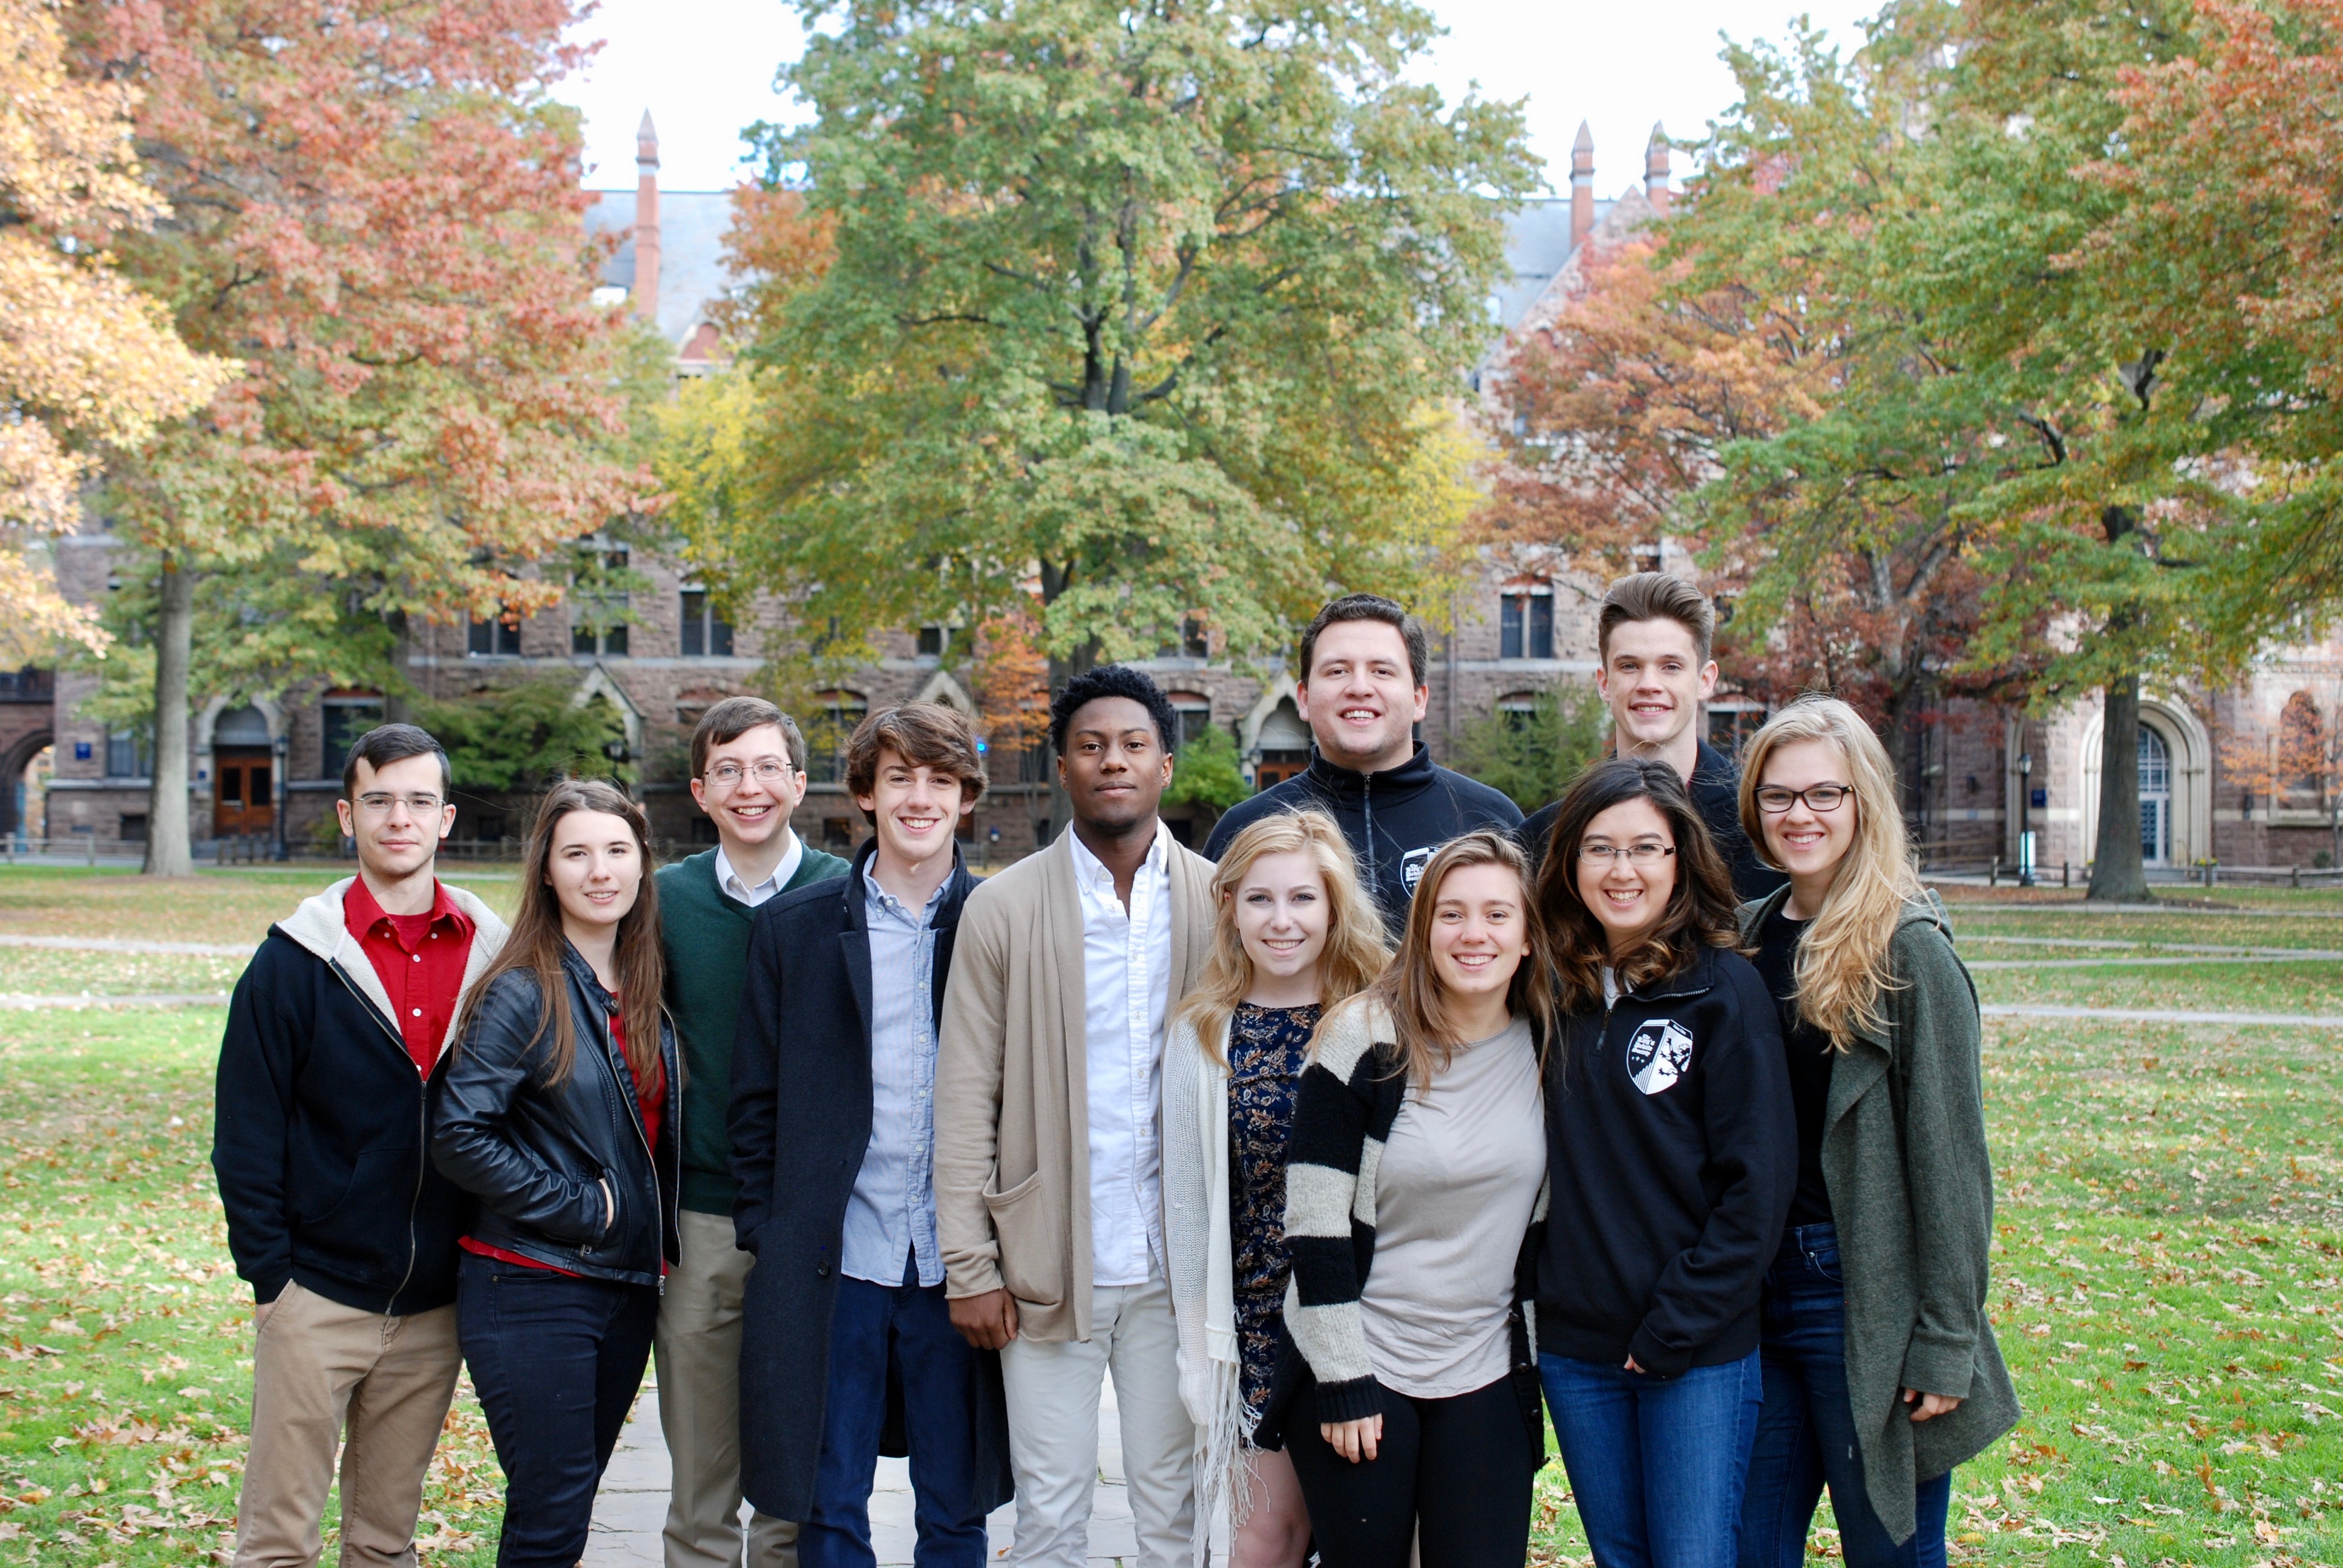 The King's Debate Society group photo at Yale